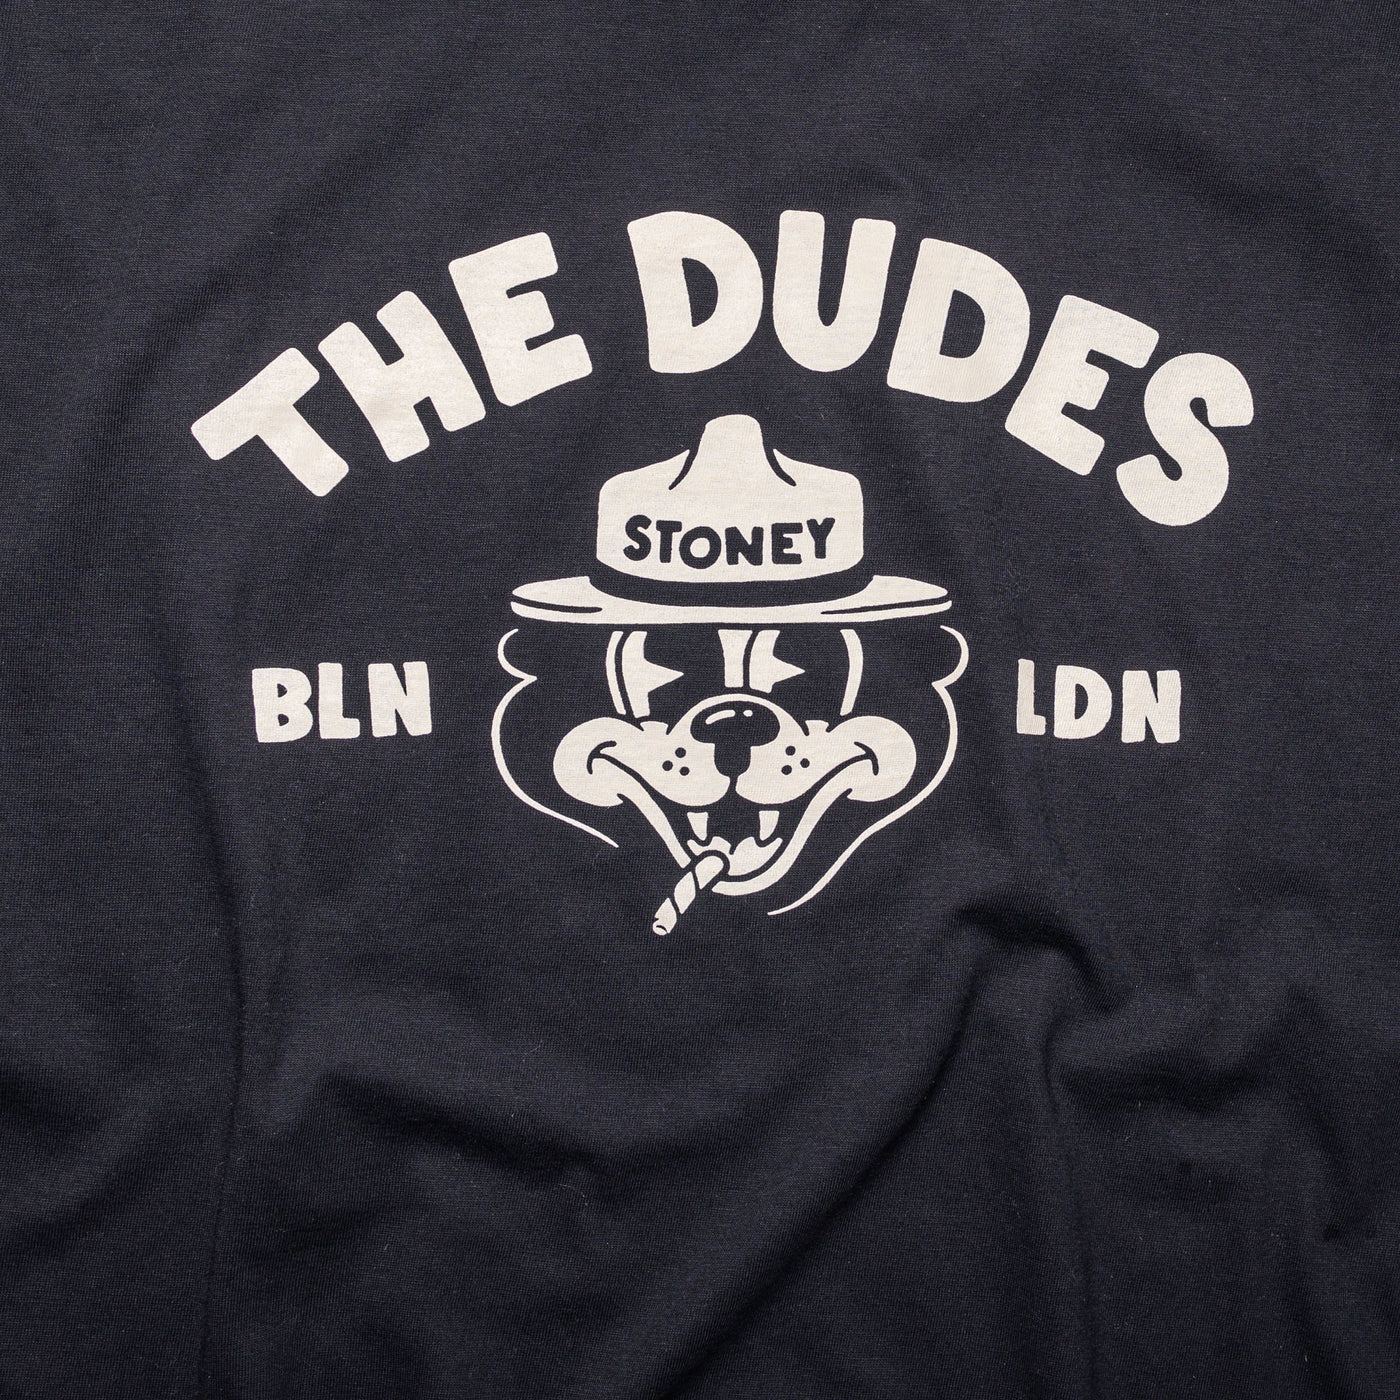 DUDES - T-shirt - Stoney - Black